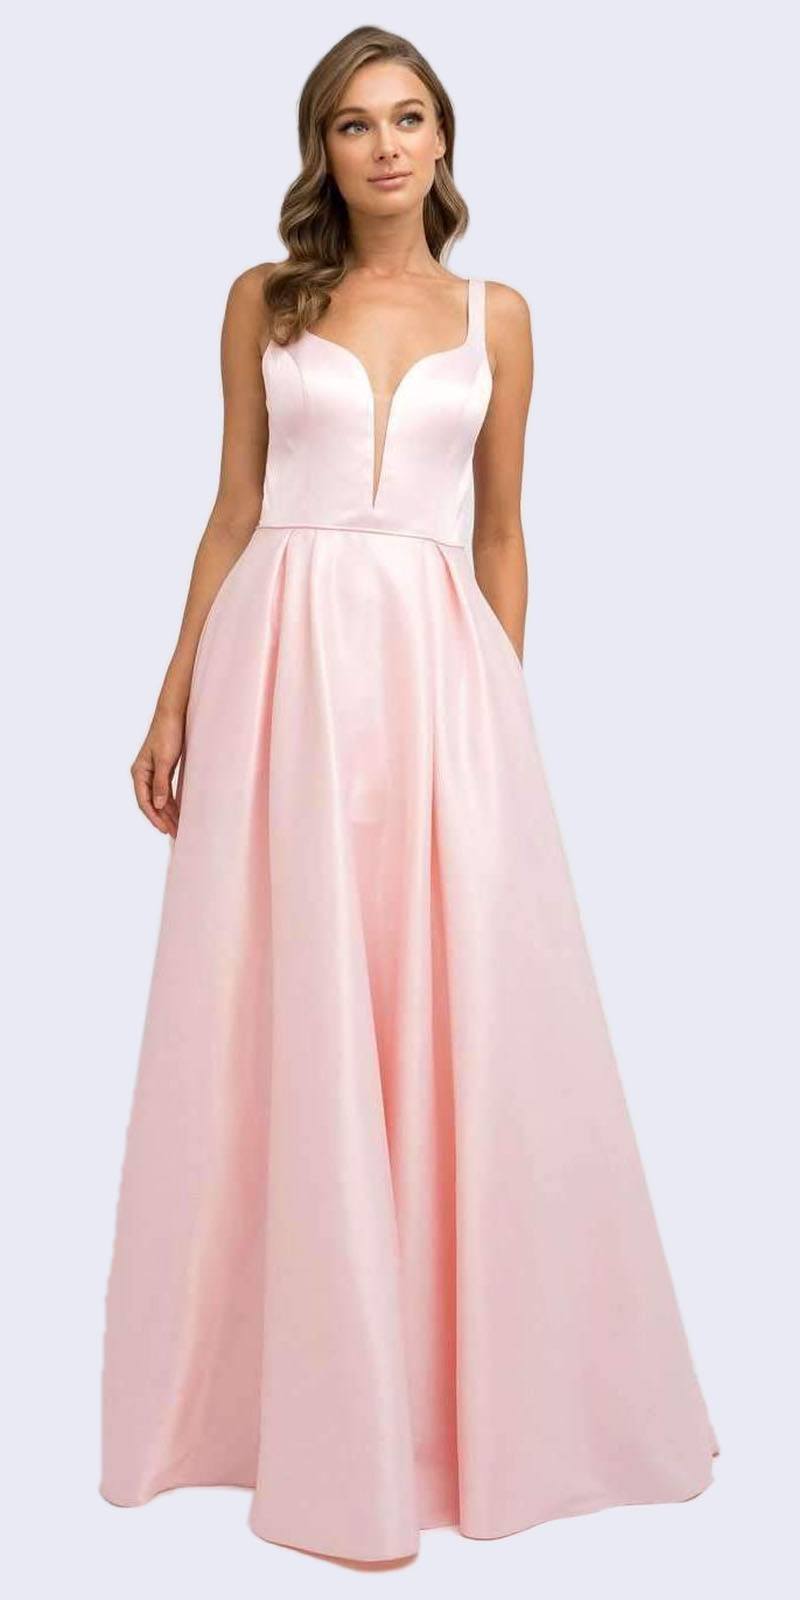 Juliet 691 Floor Length Blush Prom Dress A-Line Cut-Out Bow Back